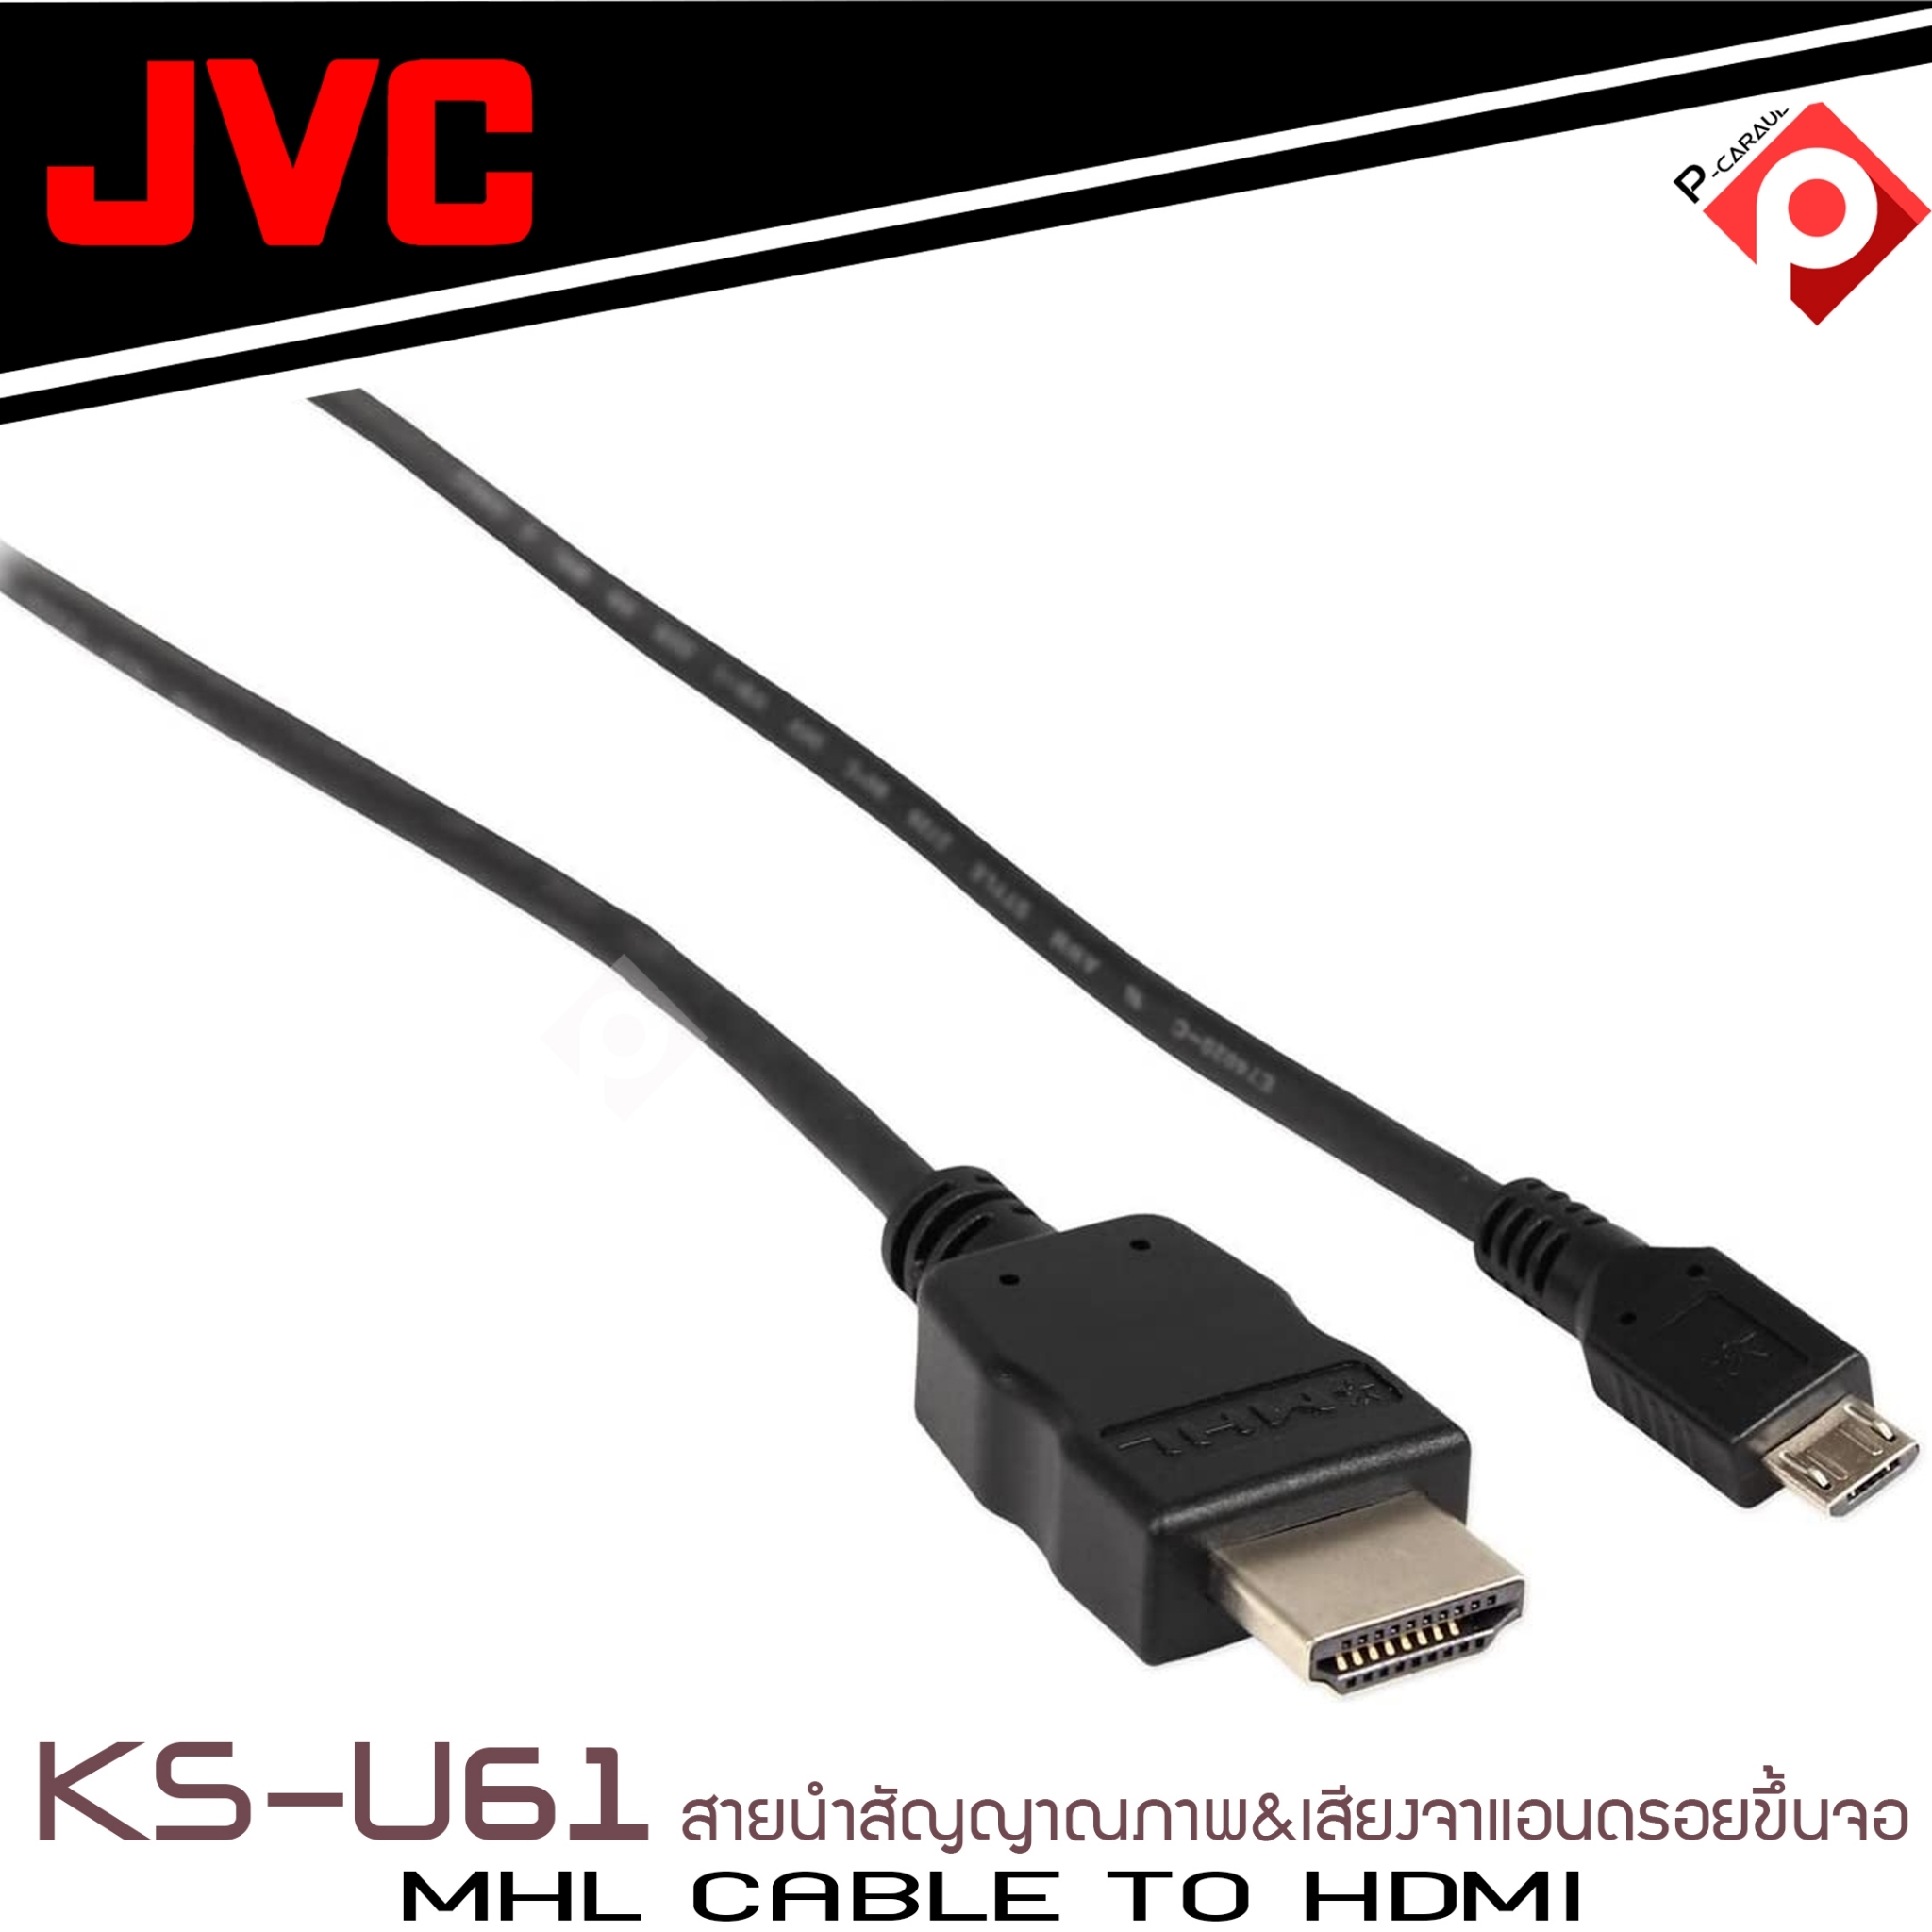 Jvc ks-u61 Mhl A Hdmi Cable สายนำสัญญาณภาพ &เสียงจากแอนดรอยขึ้นจอรถยนต์